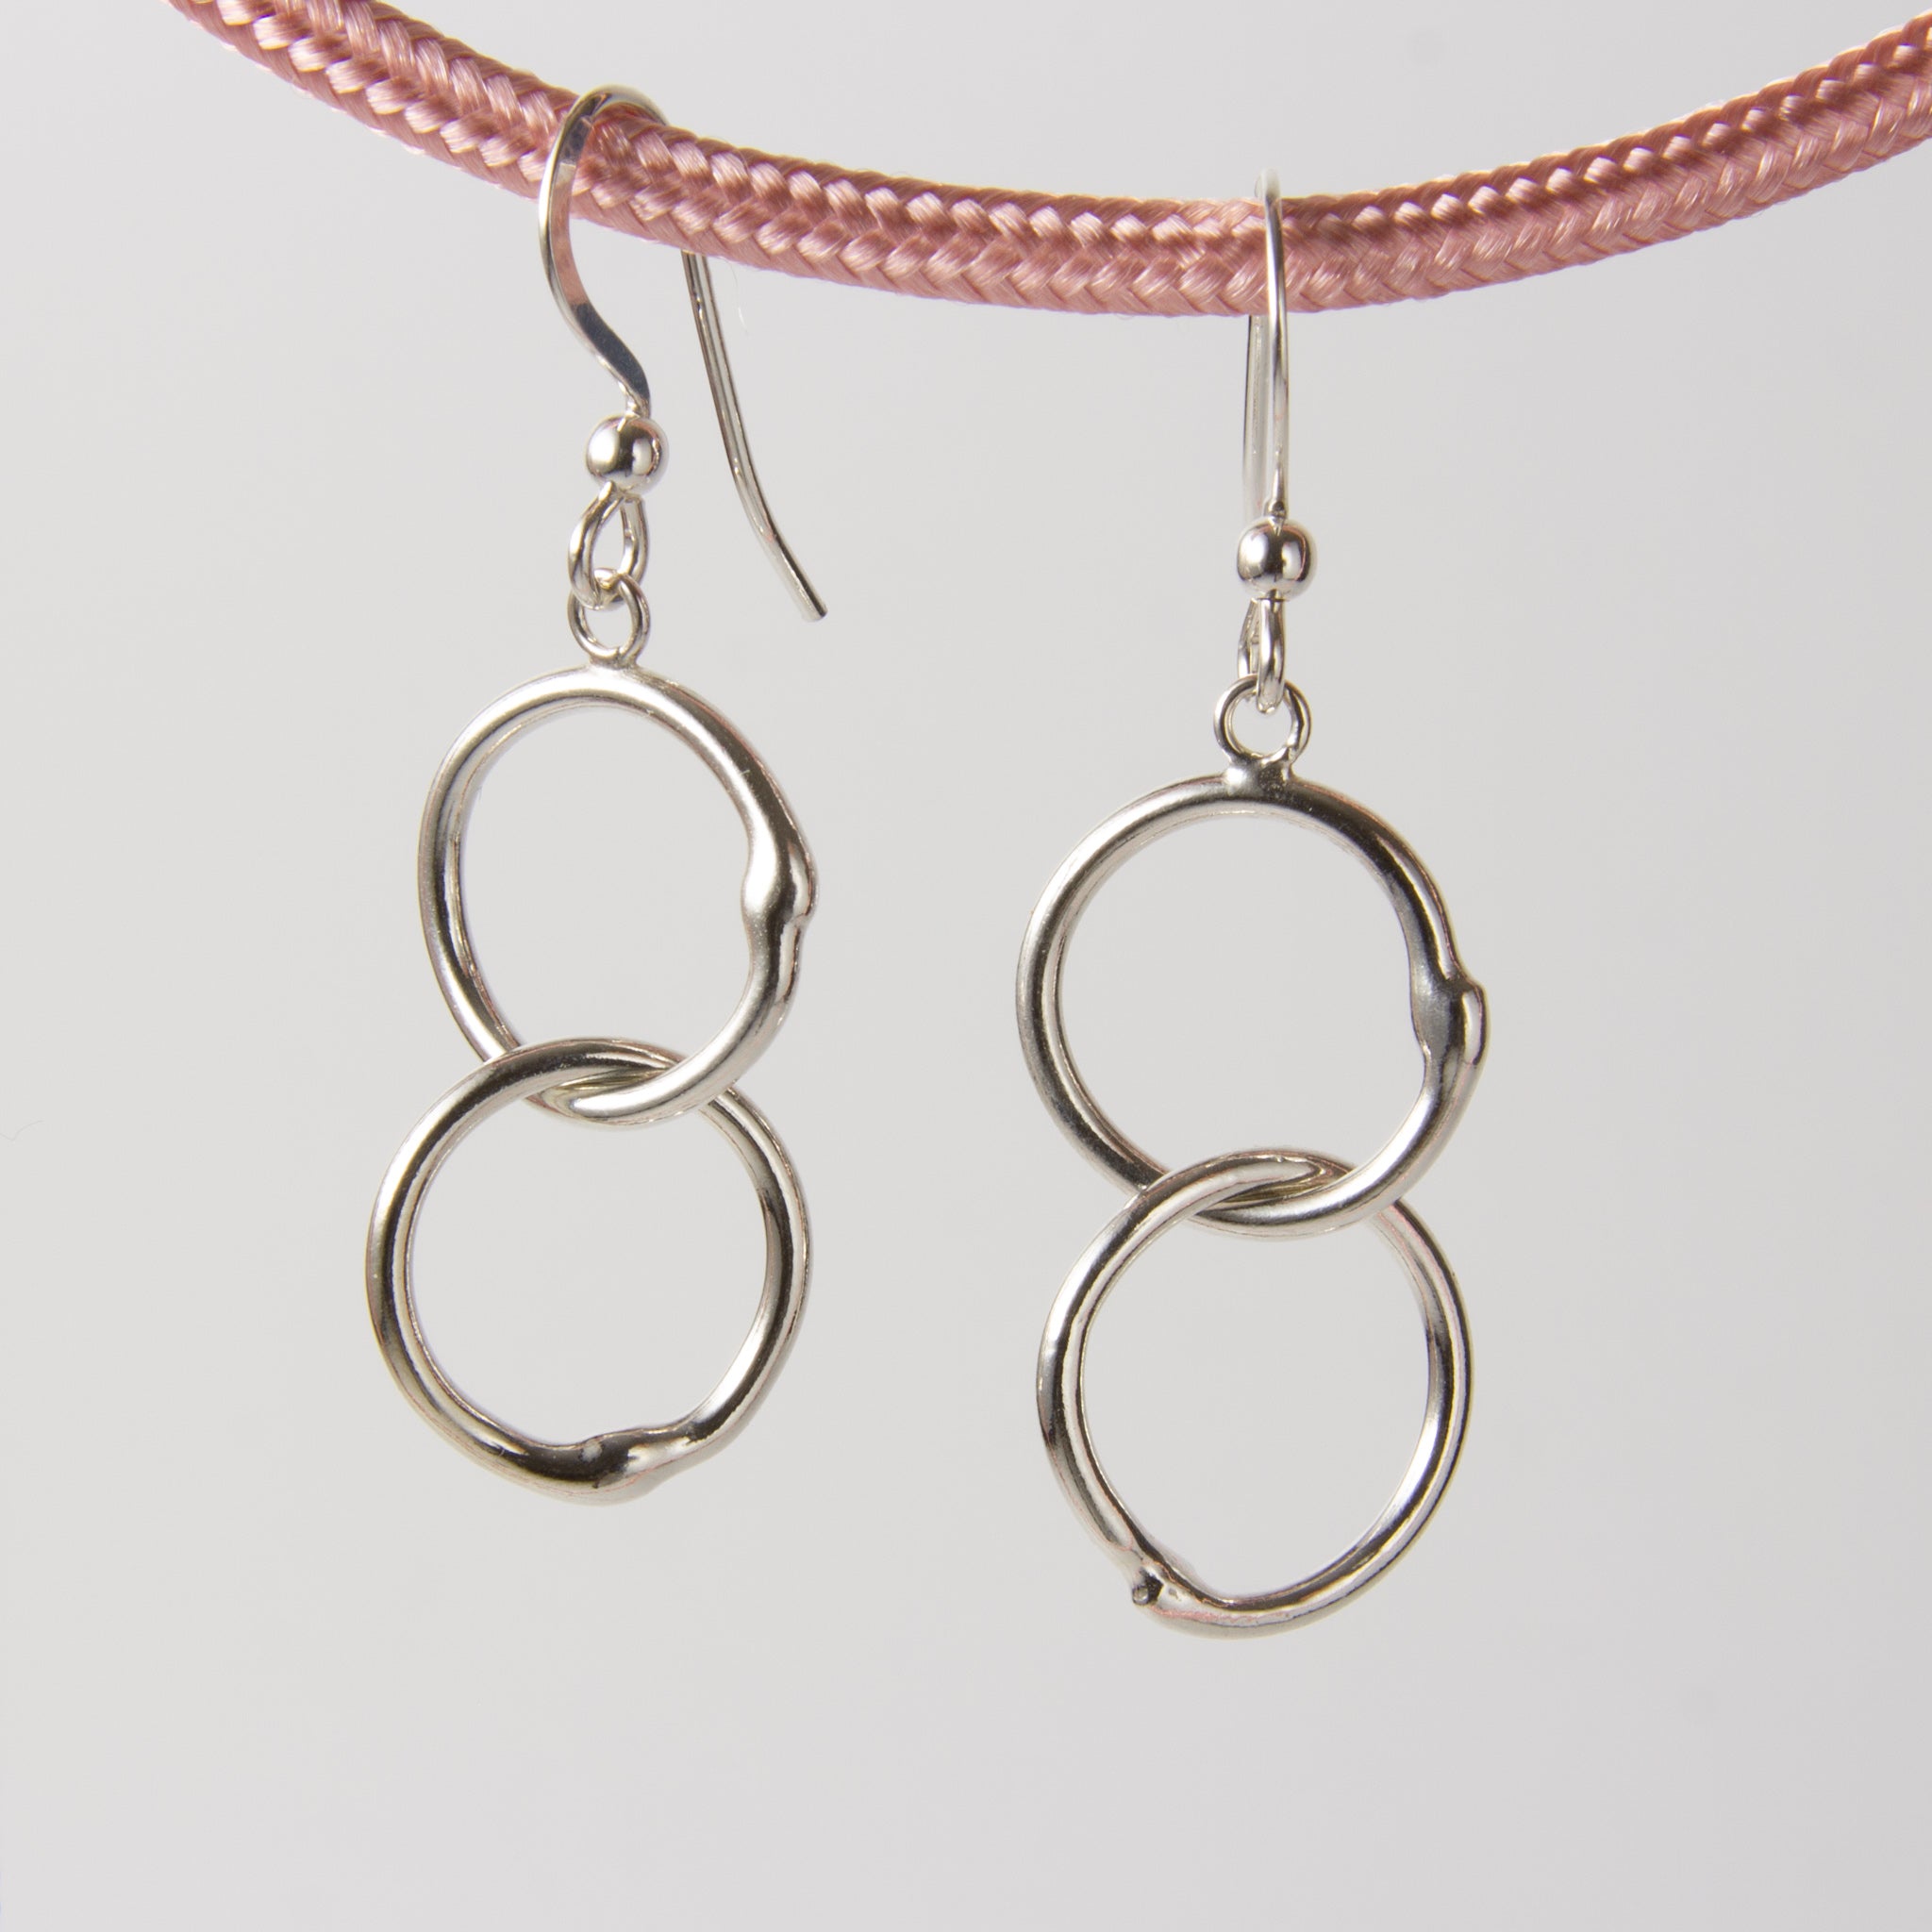 Mistura handmade fused like silver earrings - pair